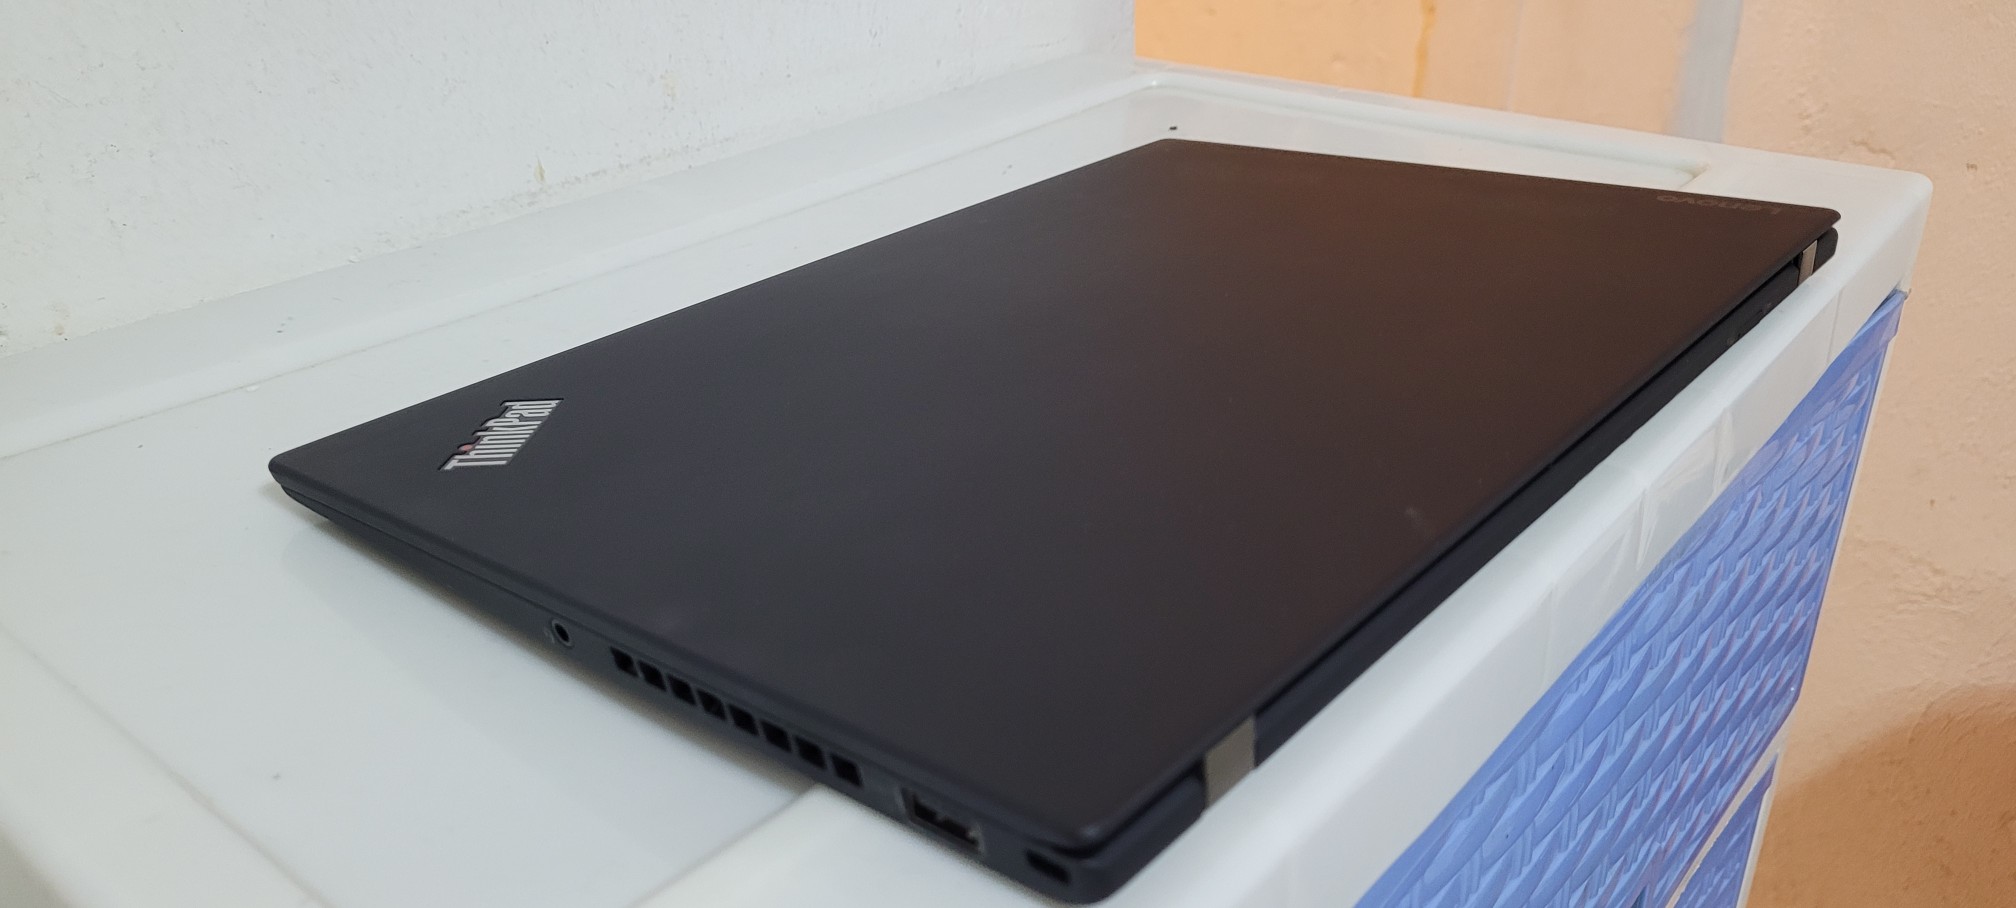 computadoras y laptops - Lenovo T460 14 Pulg Core i5 6ta Gen Ram 8gb ddr4 Disco 256GB SSD Solido hdmi 2